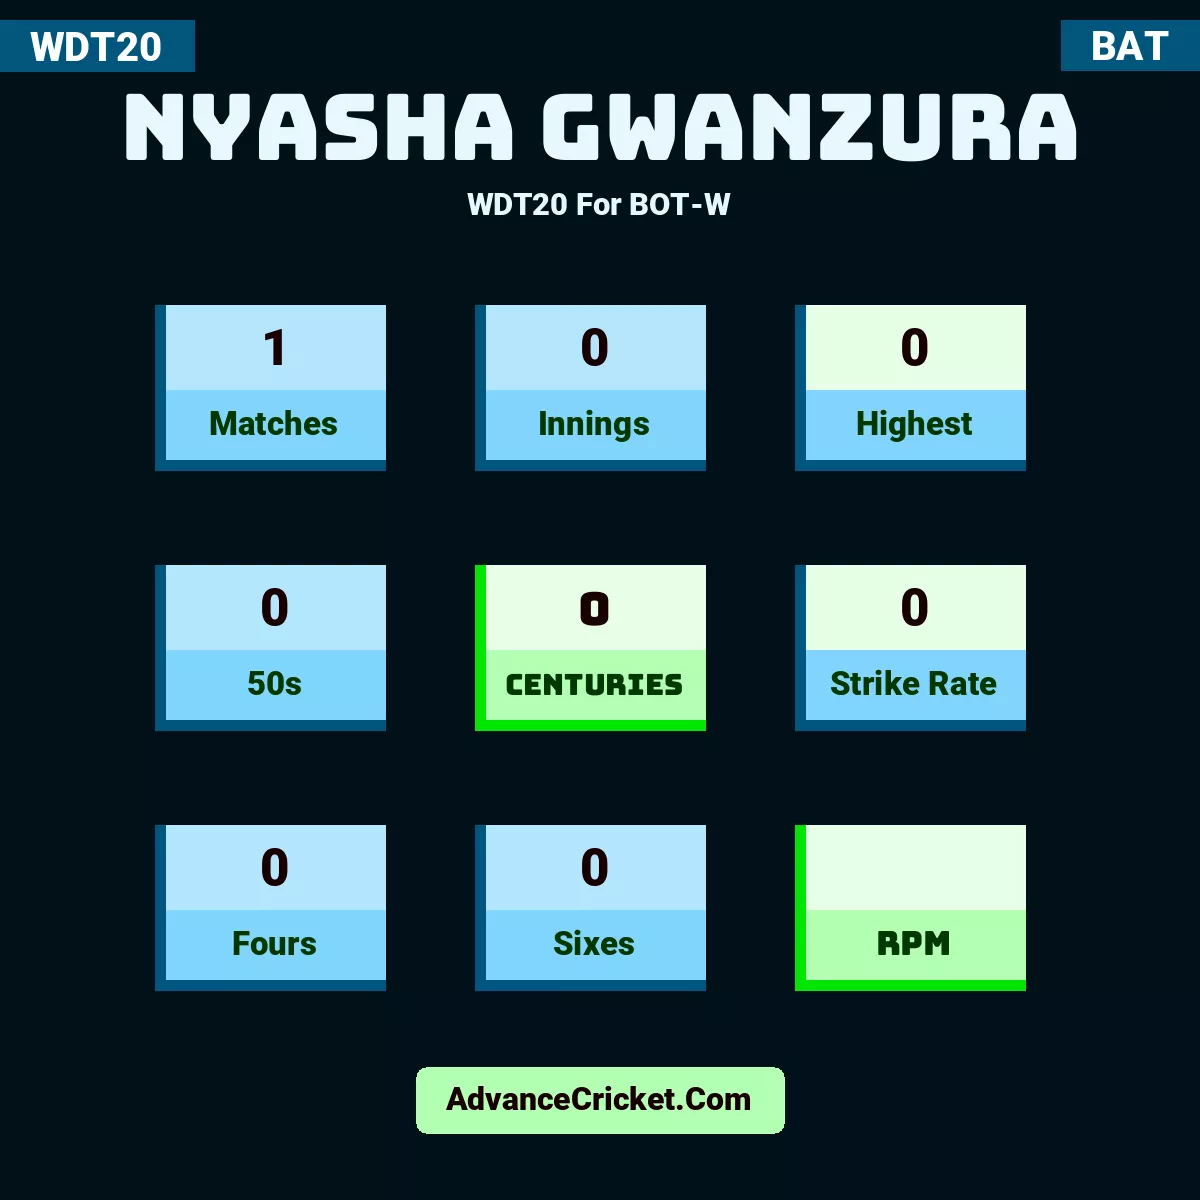 Nyasha Gwanzura WDT20  For BOT-W, Nyasha Gwanzura played 1 matches, scored 0 runs as highest, 0 half-centuries, and 0 centuries, with a strike rate of 0. N.Gwanzura hit 0 fours and 0 sixes.